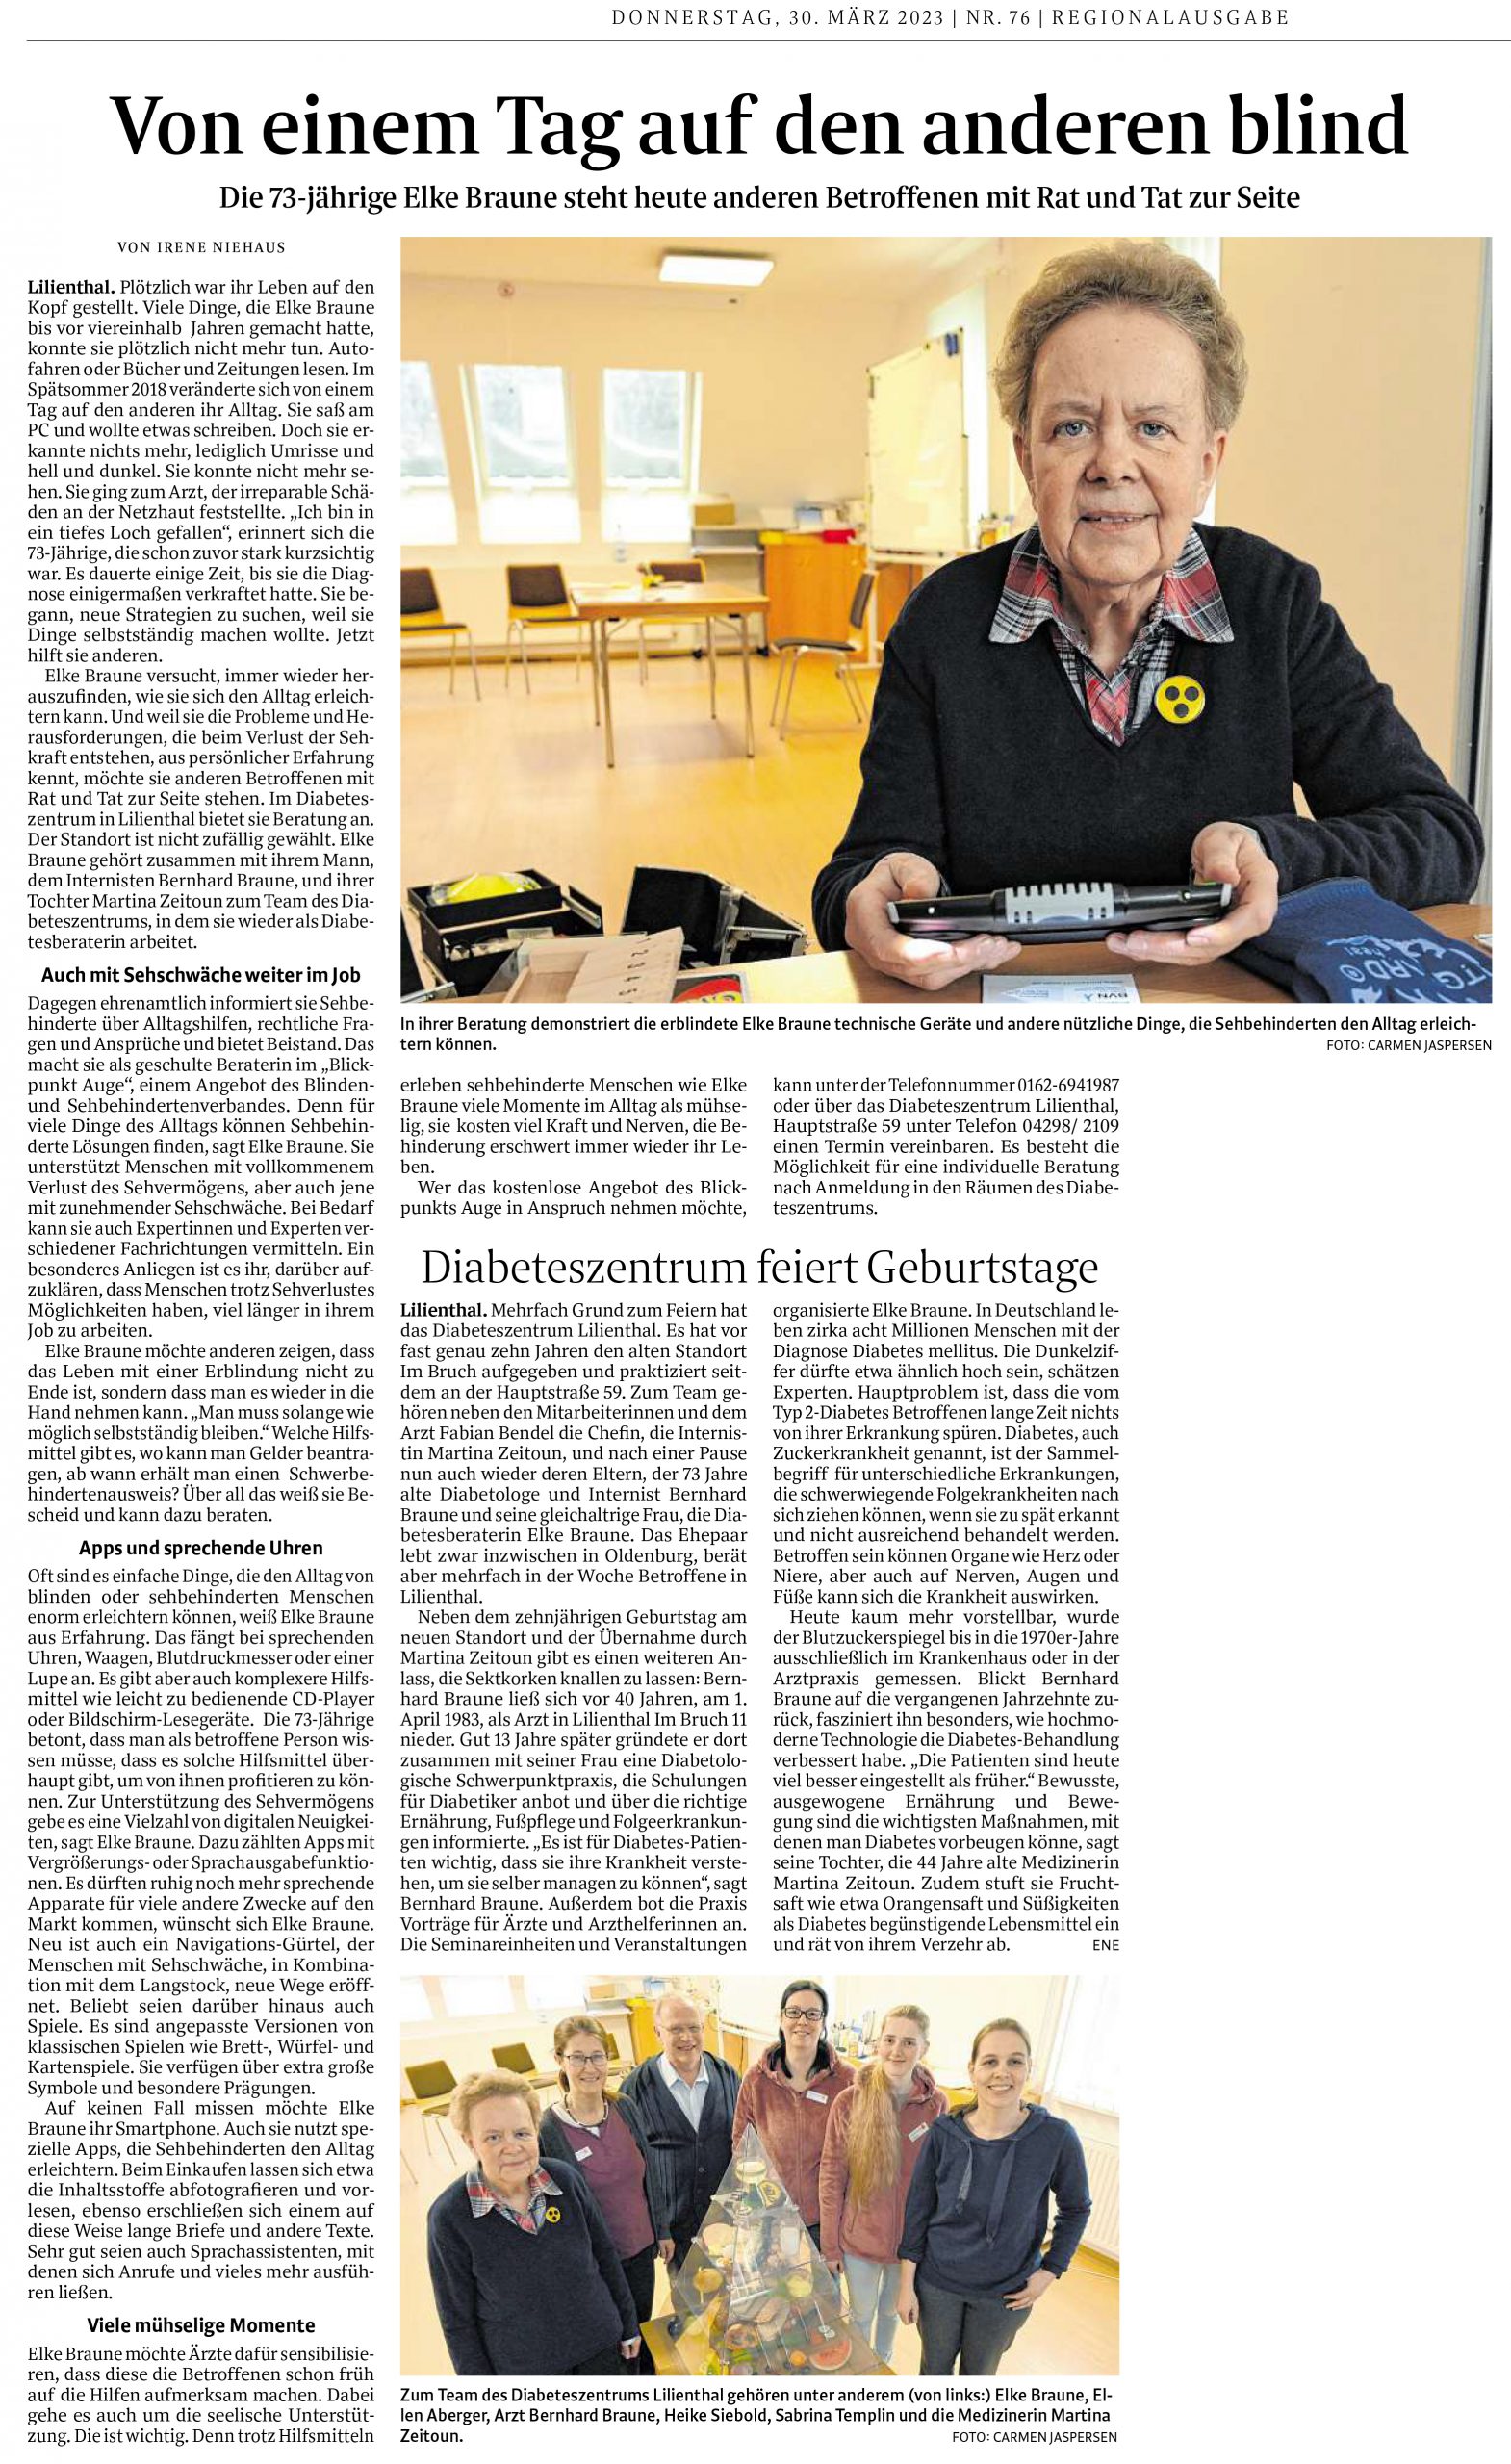 Elke Braune, Artikel Wümme-Zeitung 30.3.23